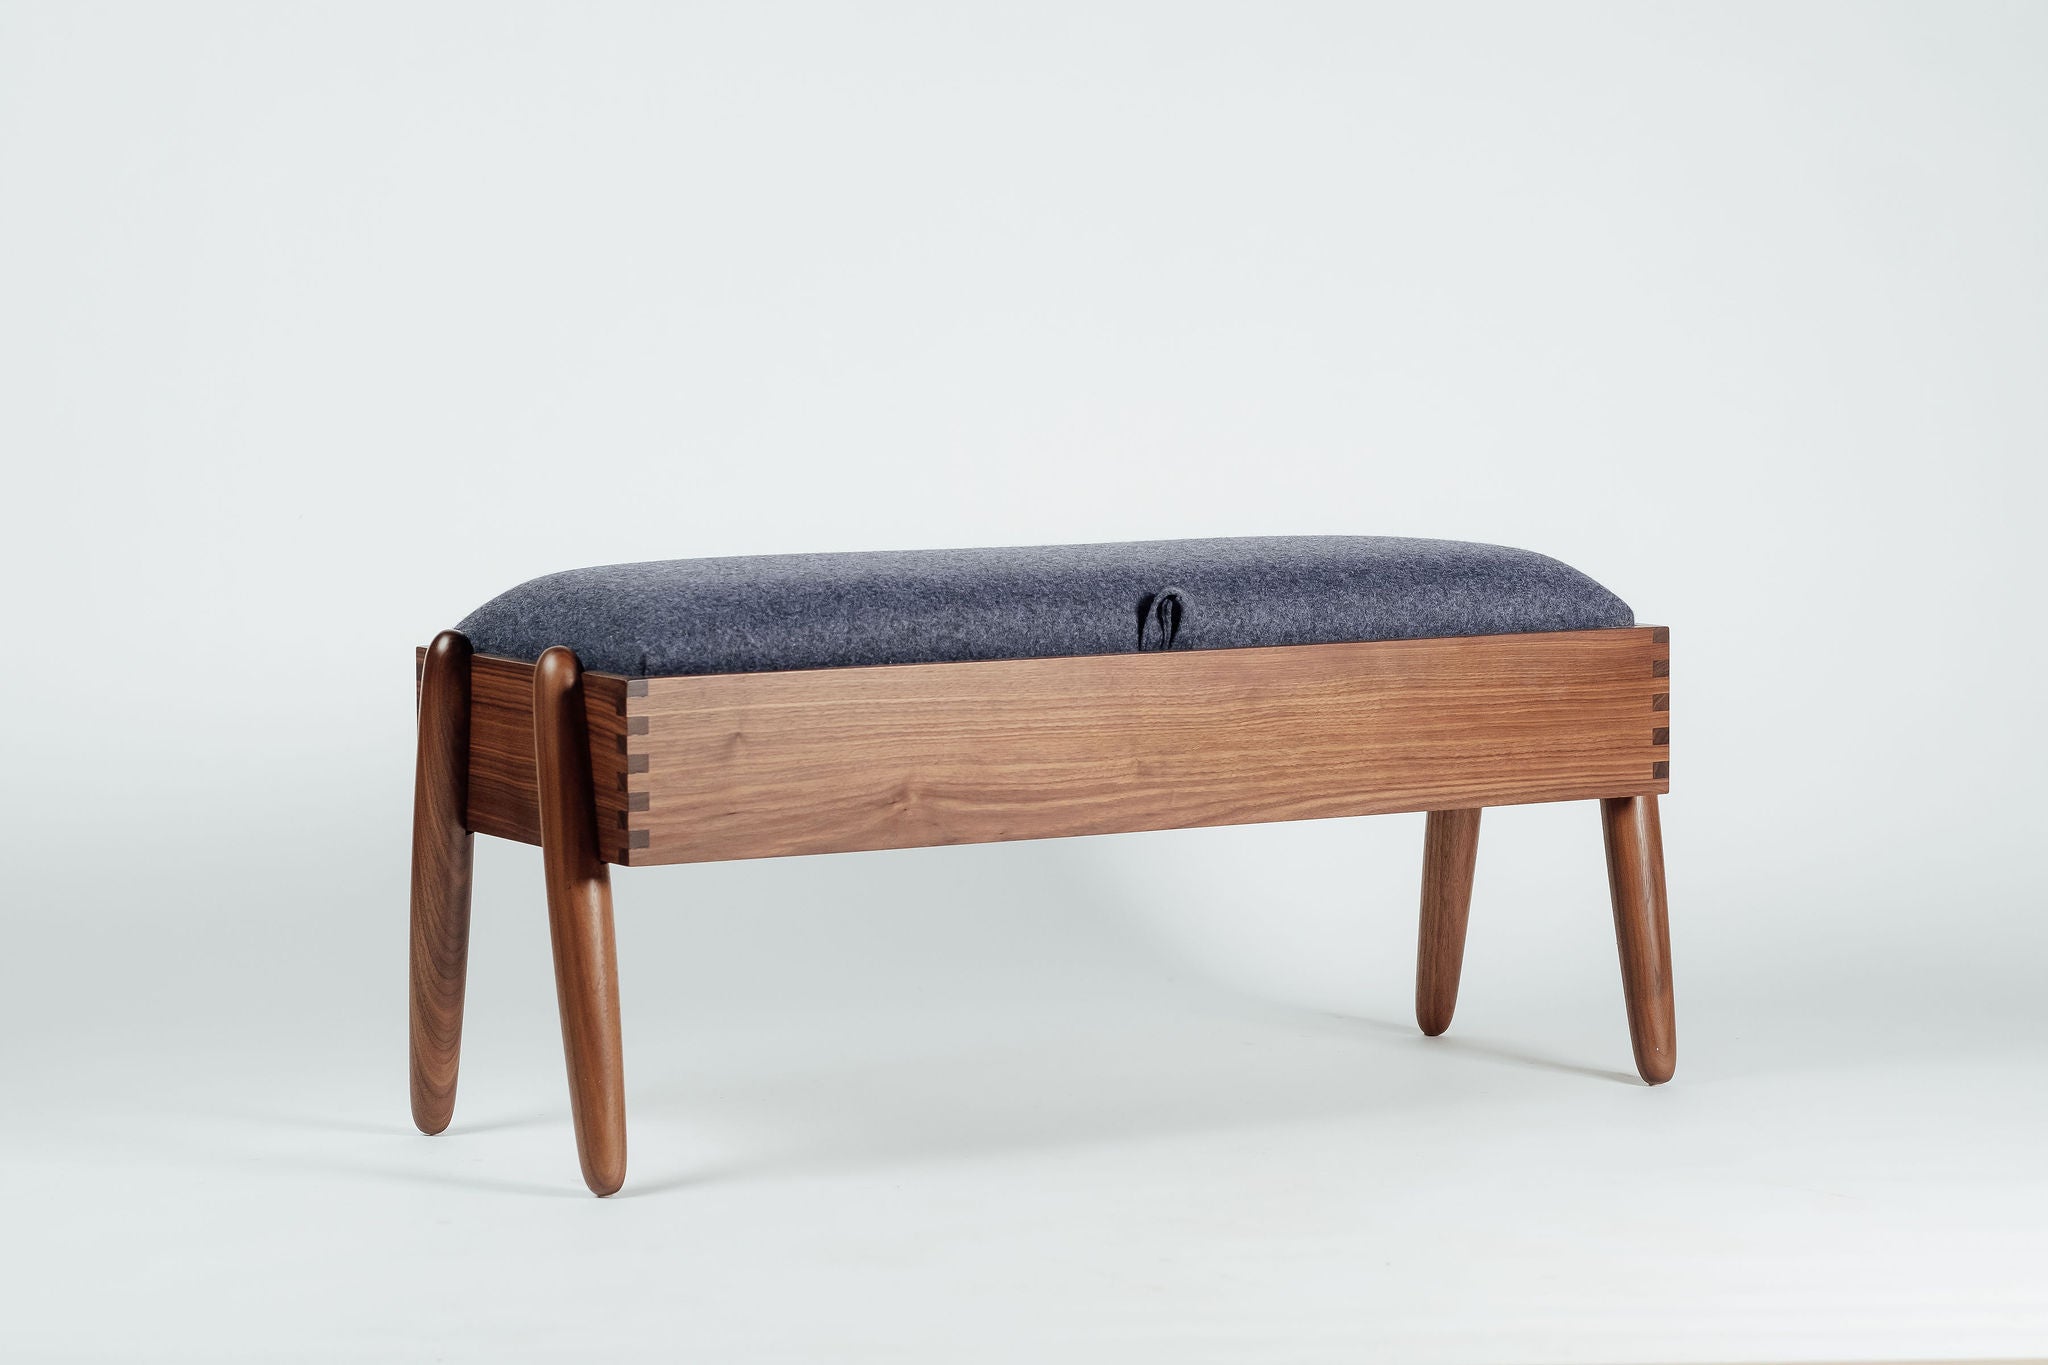 Solomon midcentury modern walnut upholstered storage bench handcrafted by Hunt & Noyer in Michigan